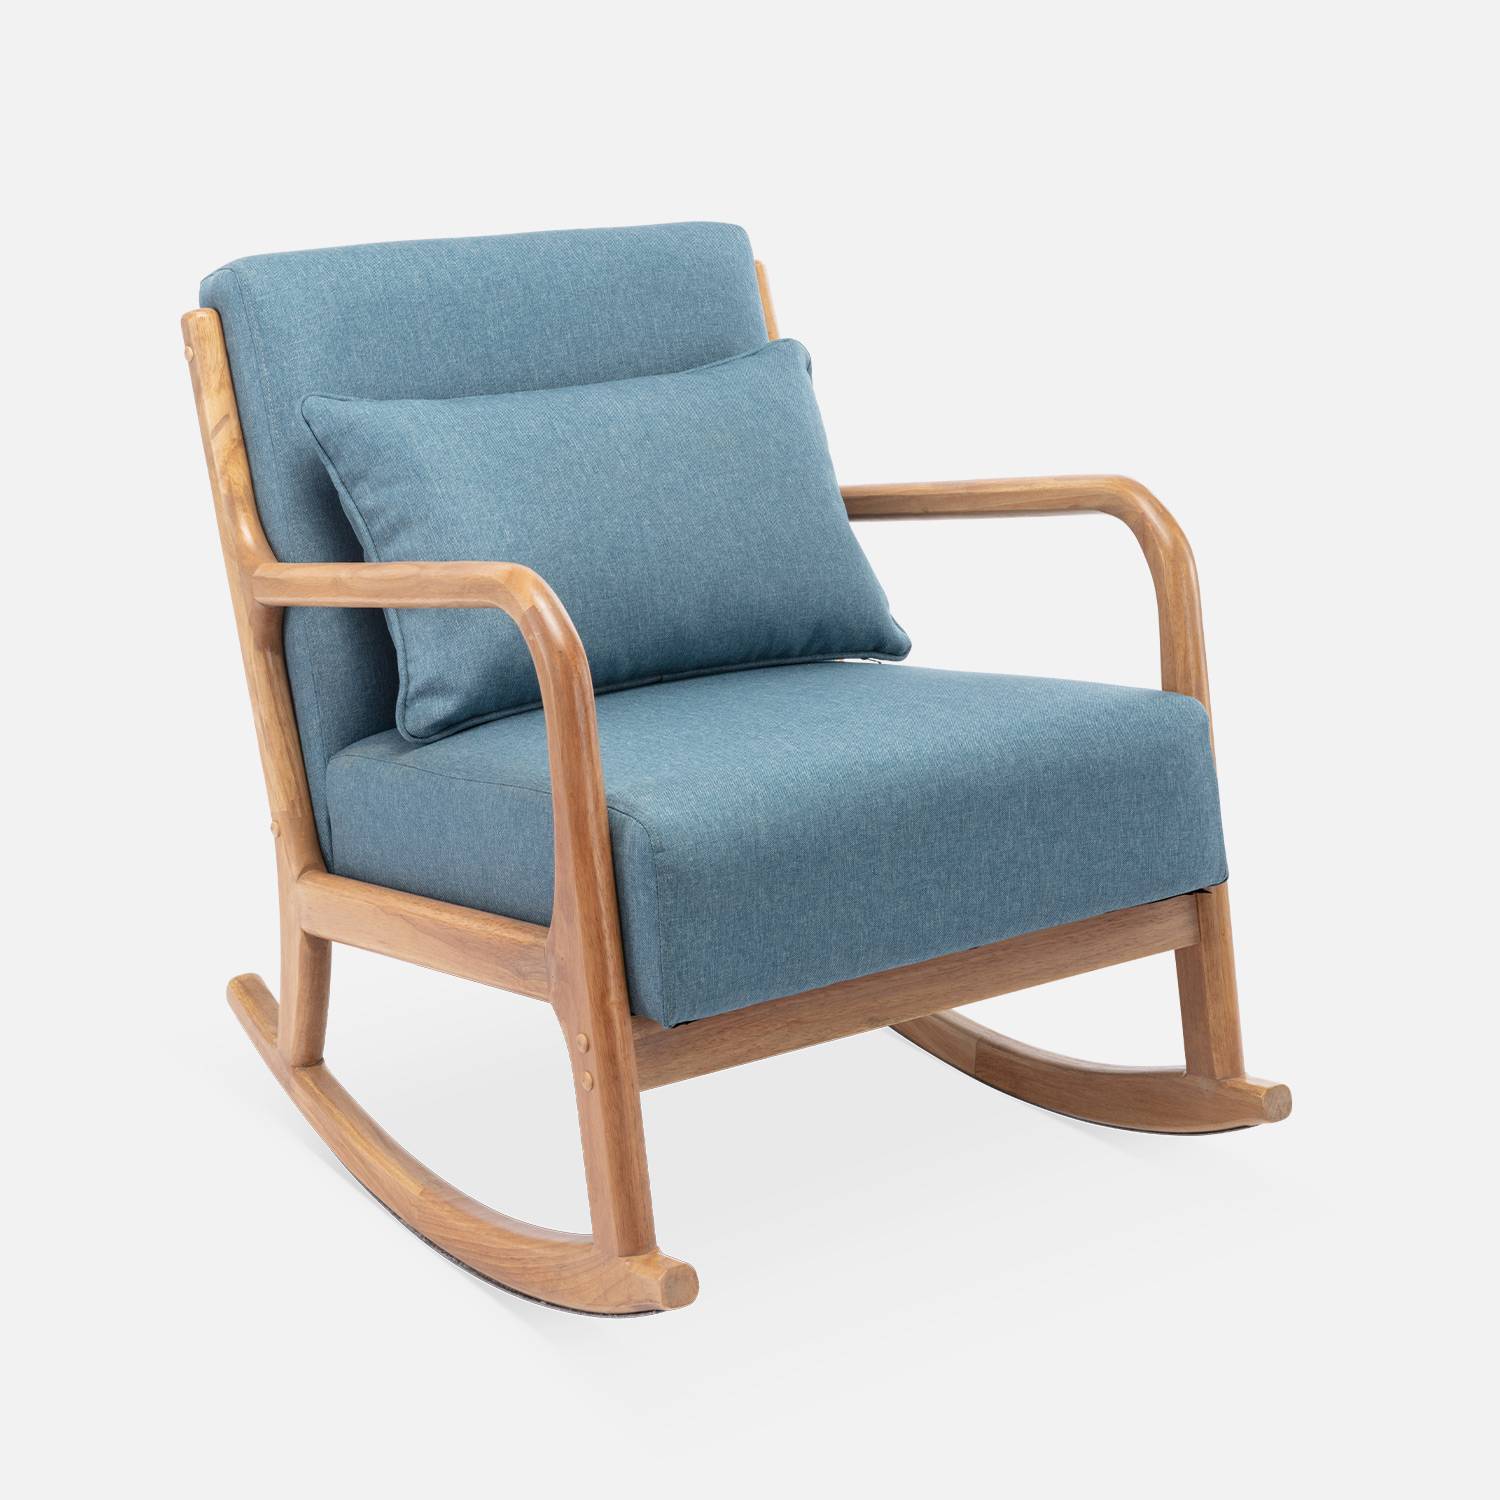 Schaukelstuhl Design Holz und Stoff, Blau, 1 Sitz, skandinavischer Schaukelstuhl  | sweeek